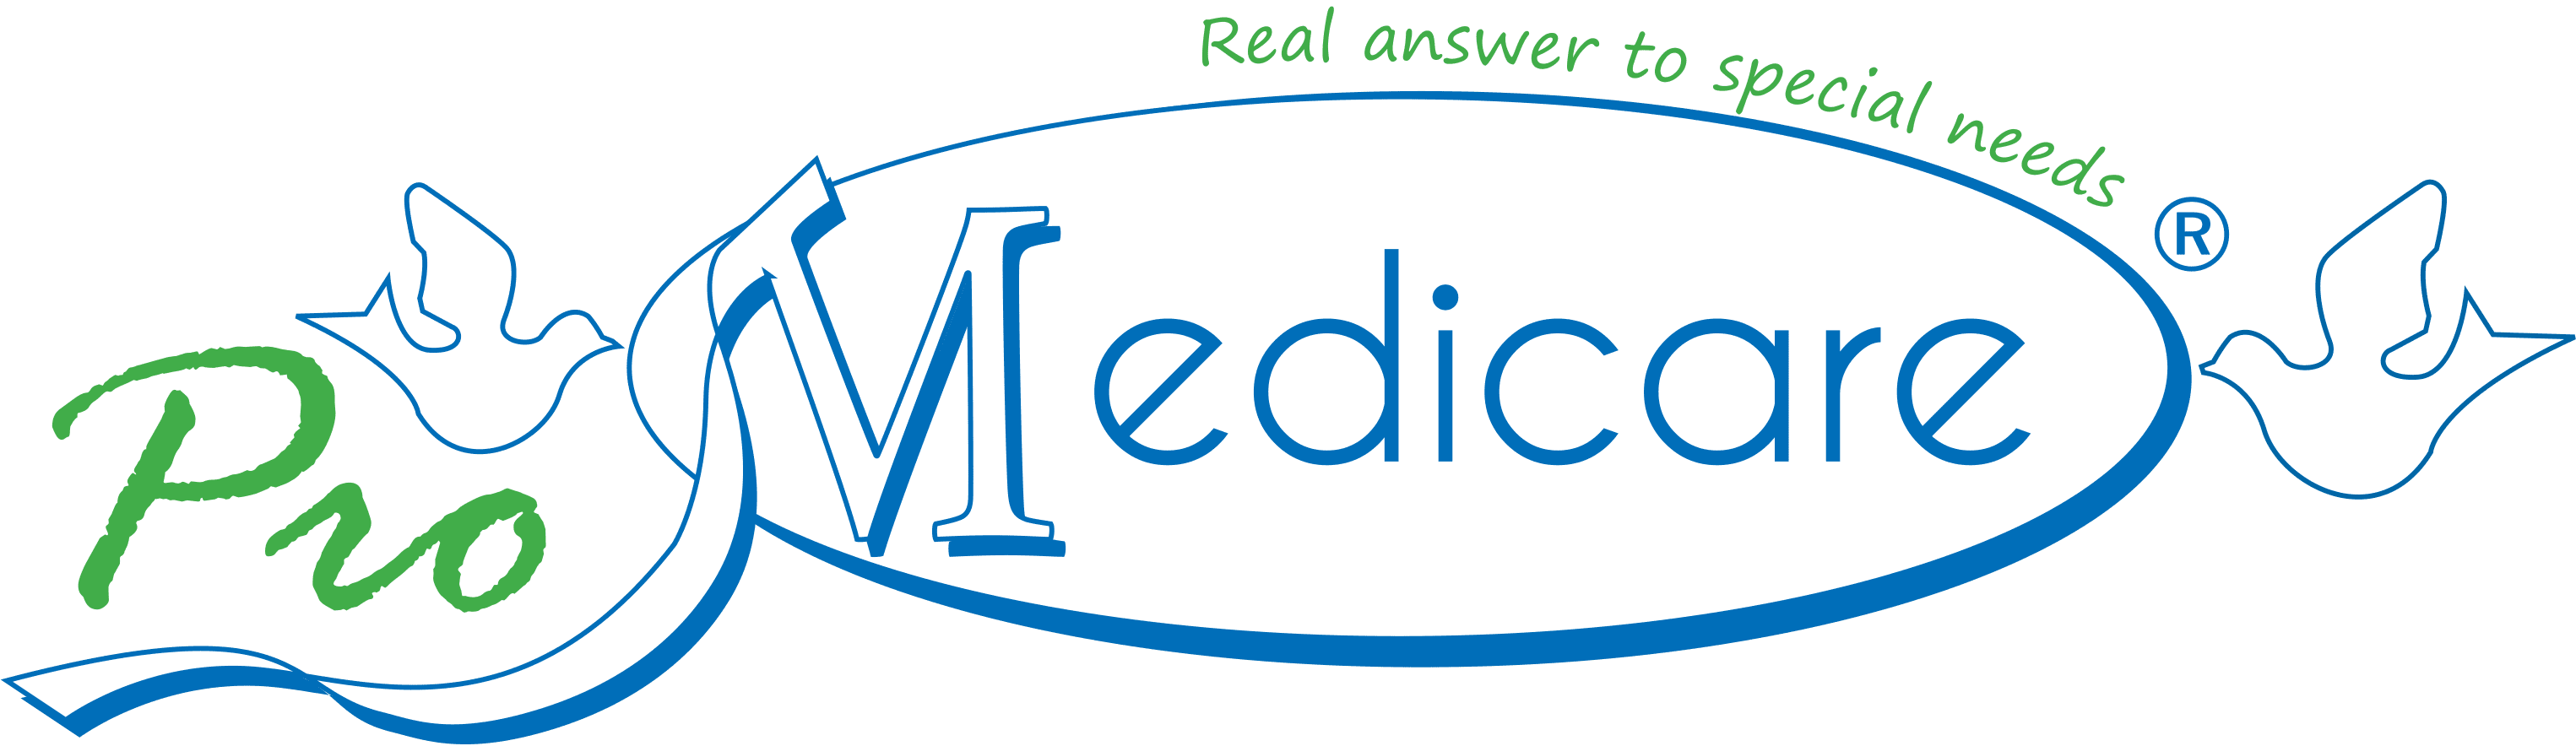 Pro Medicare logo Footer